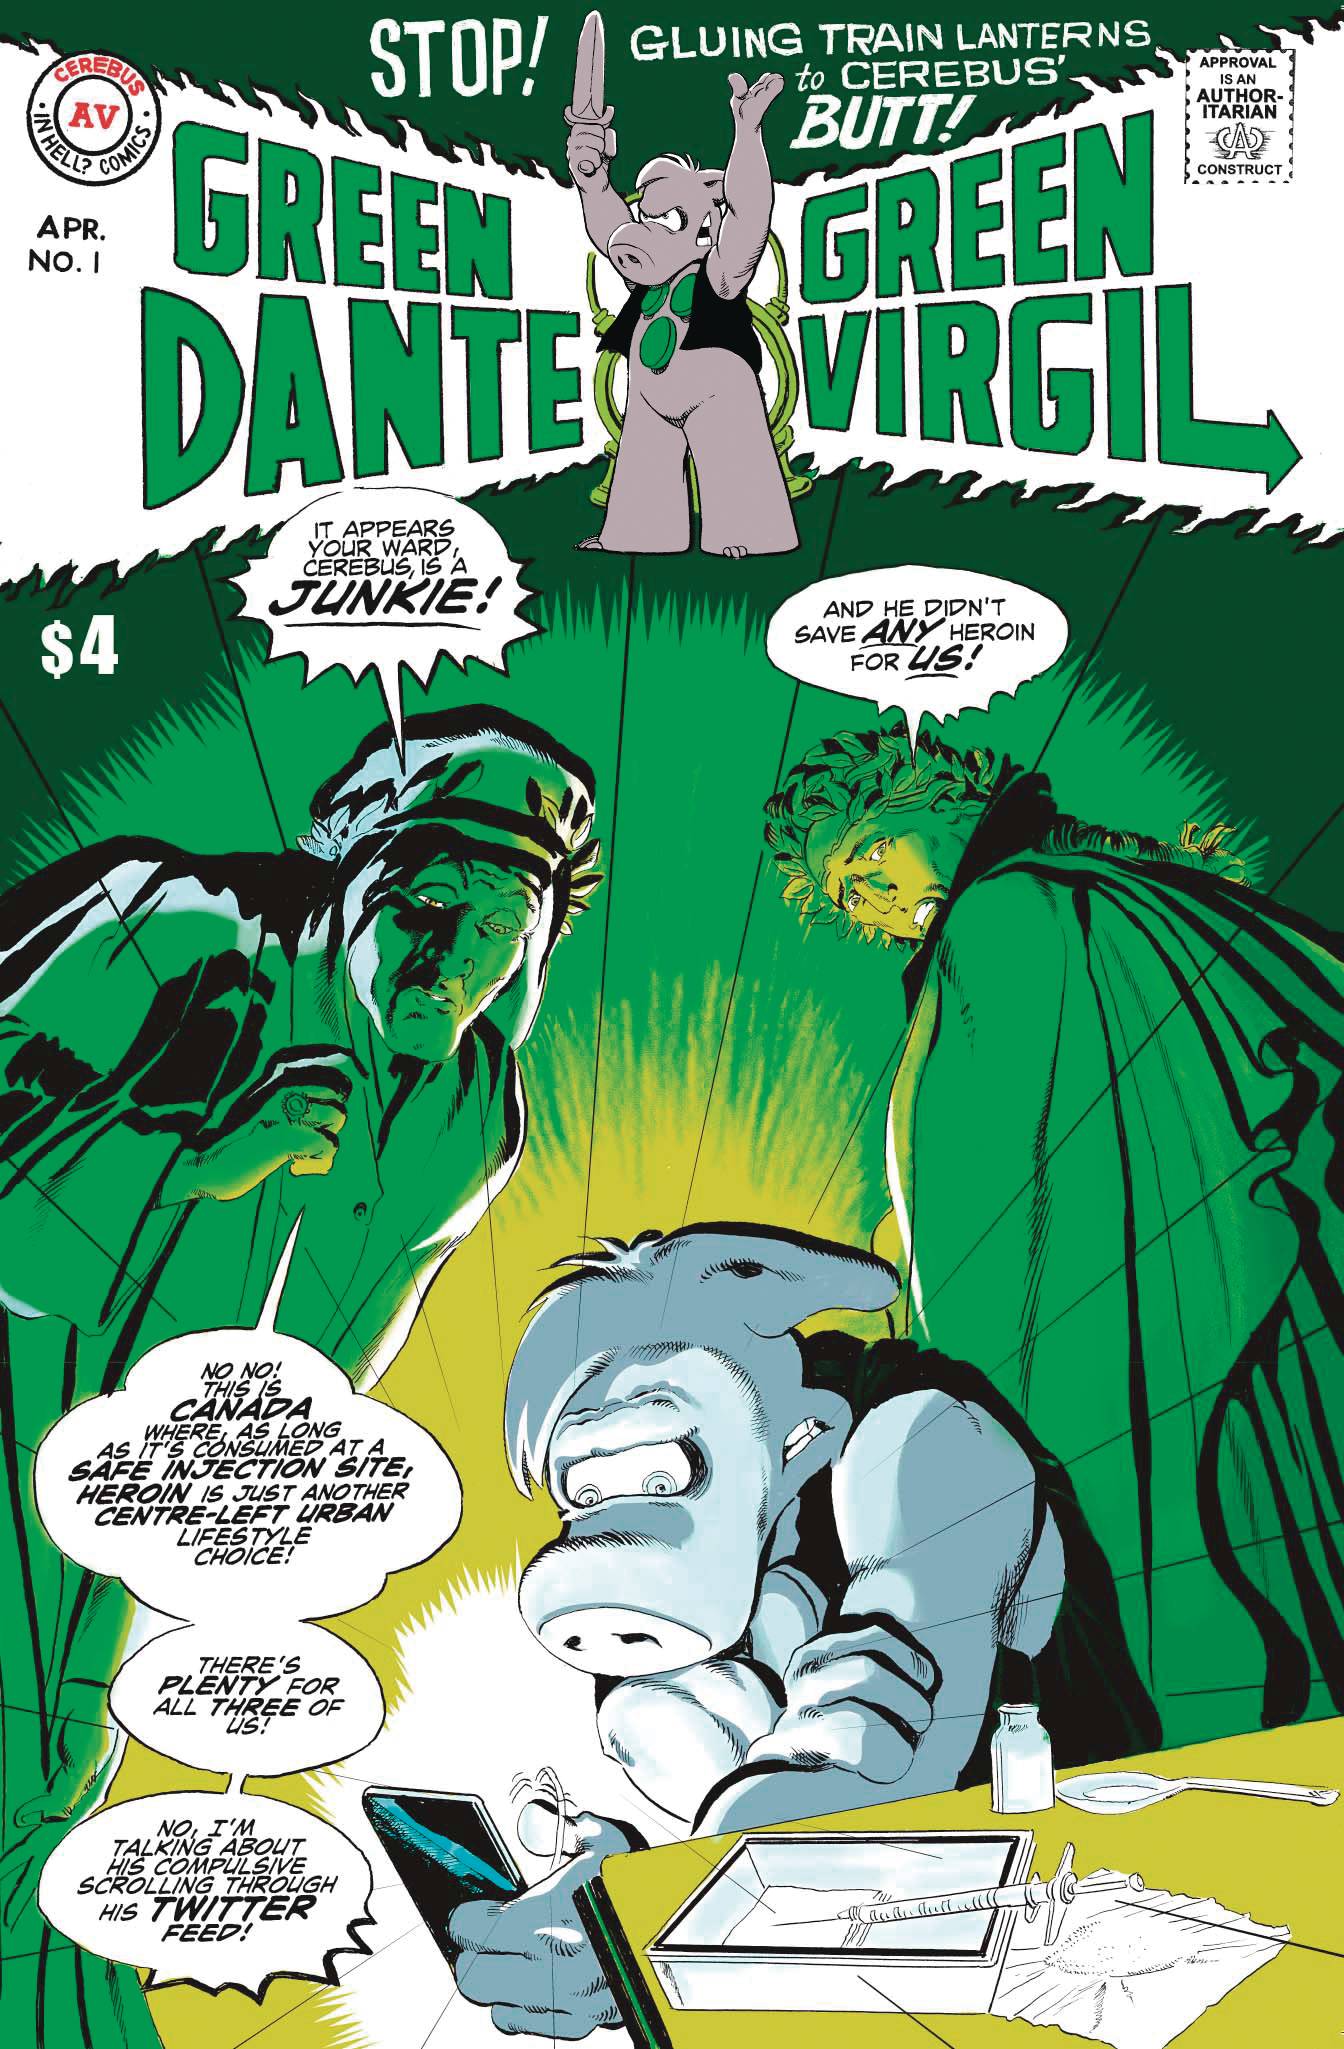 Green Dante Green Vigil (One Shot) #1 (2020)